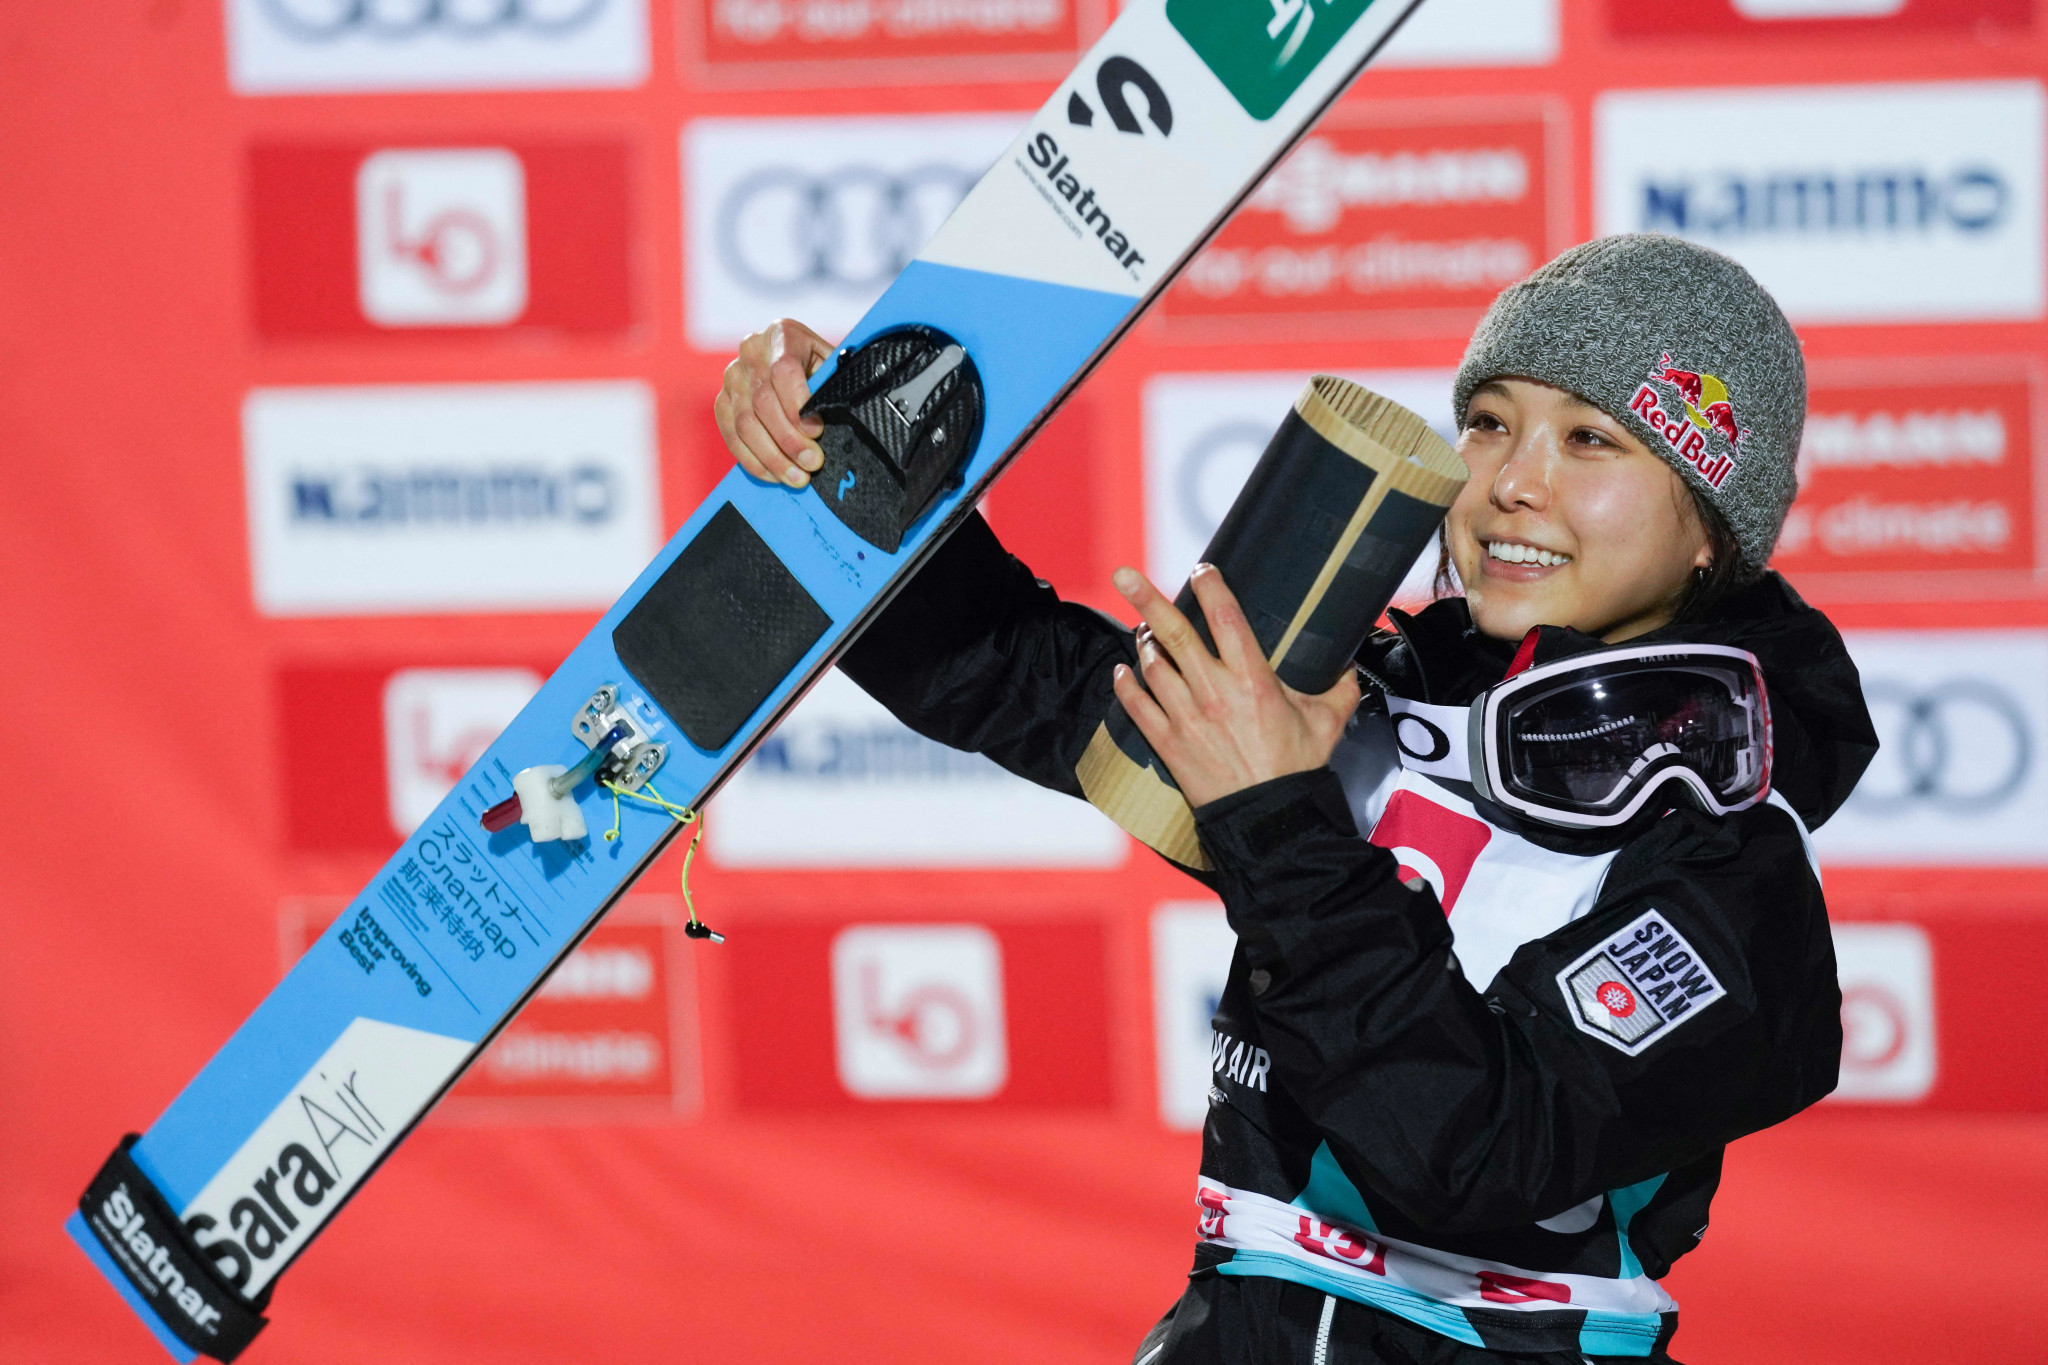 Takanashi earns second Ski Jumping World Cup victory of season in Lillehammer